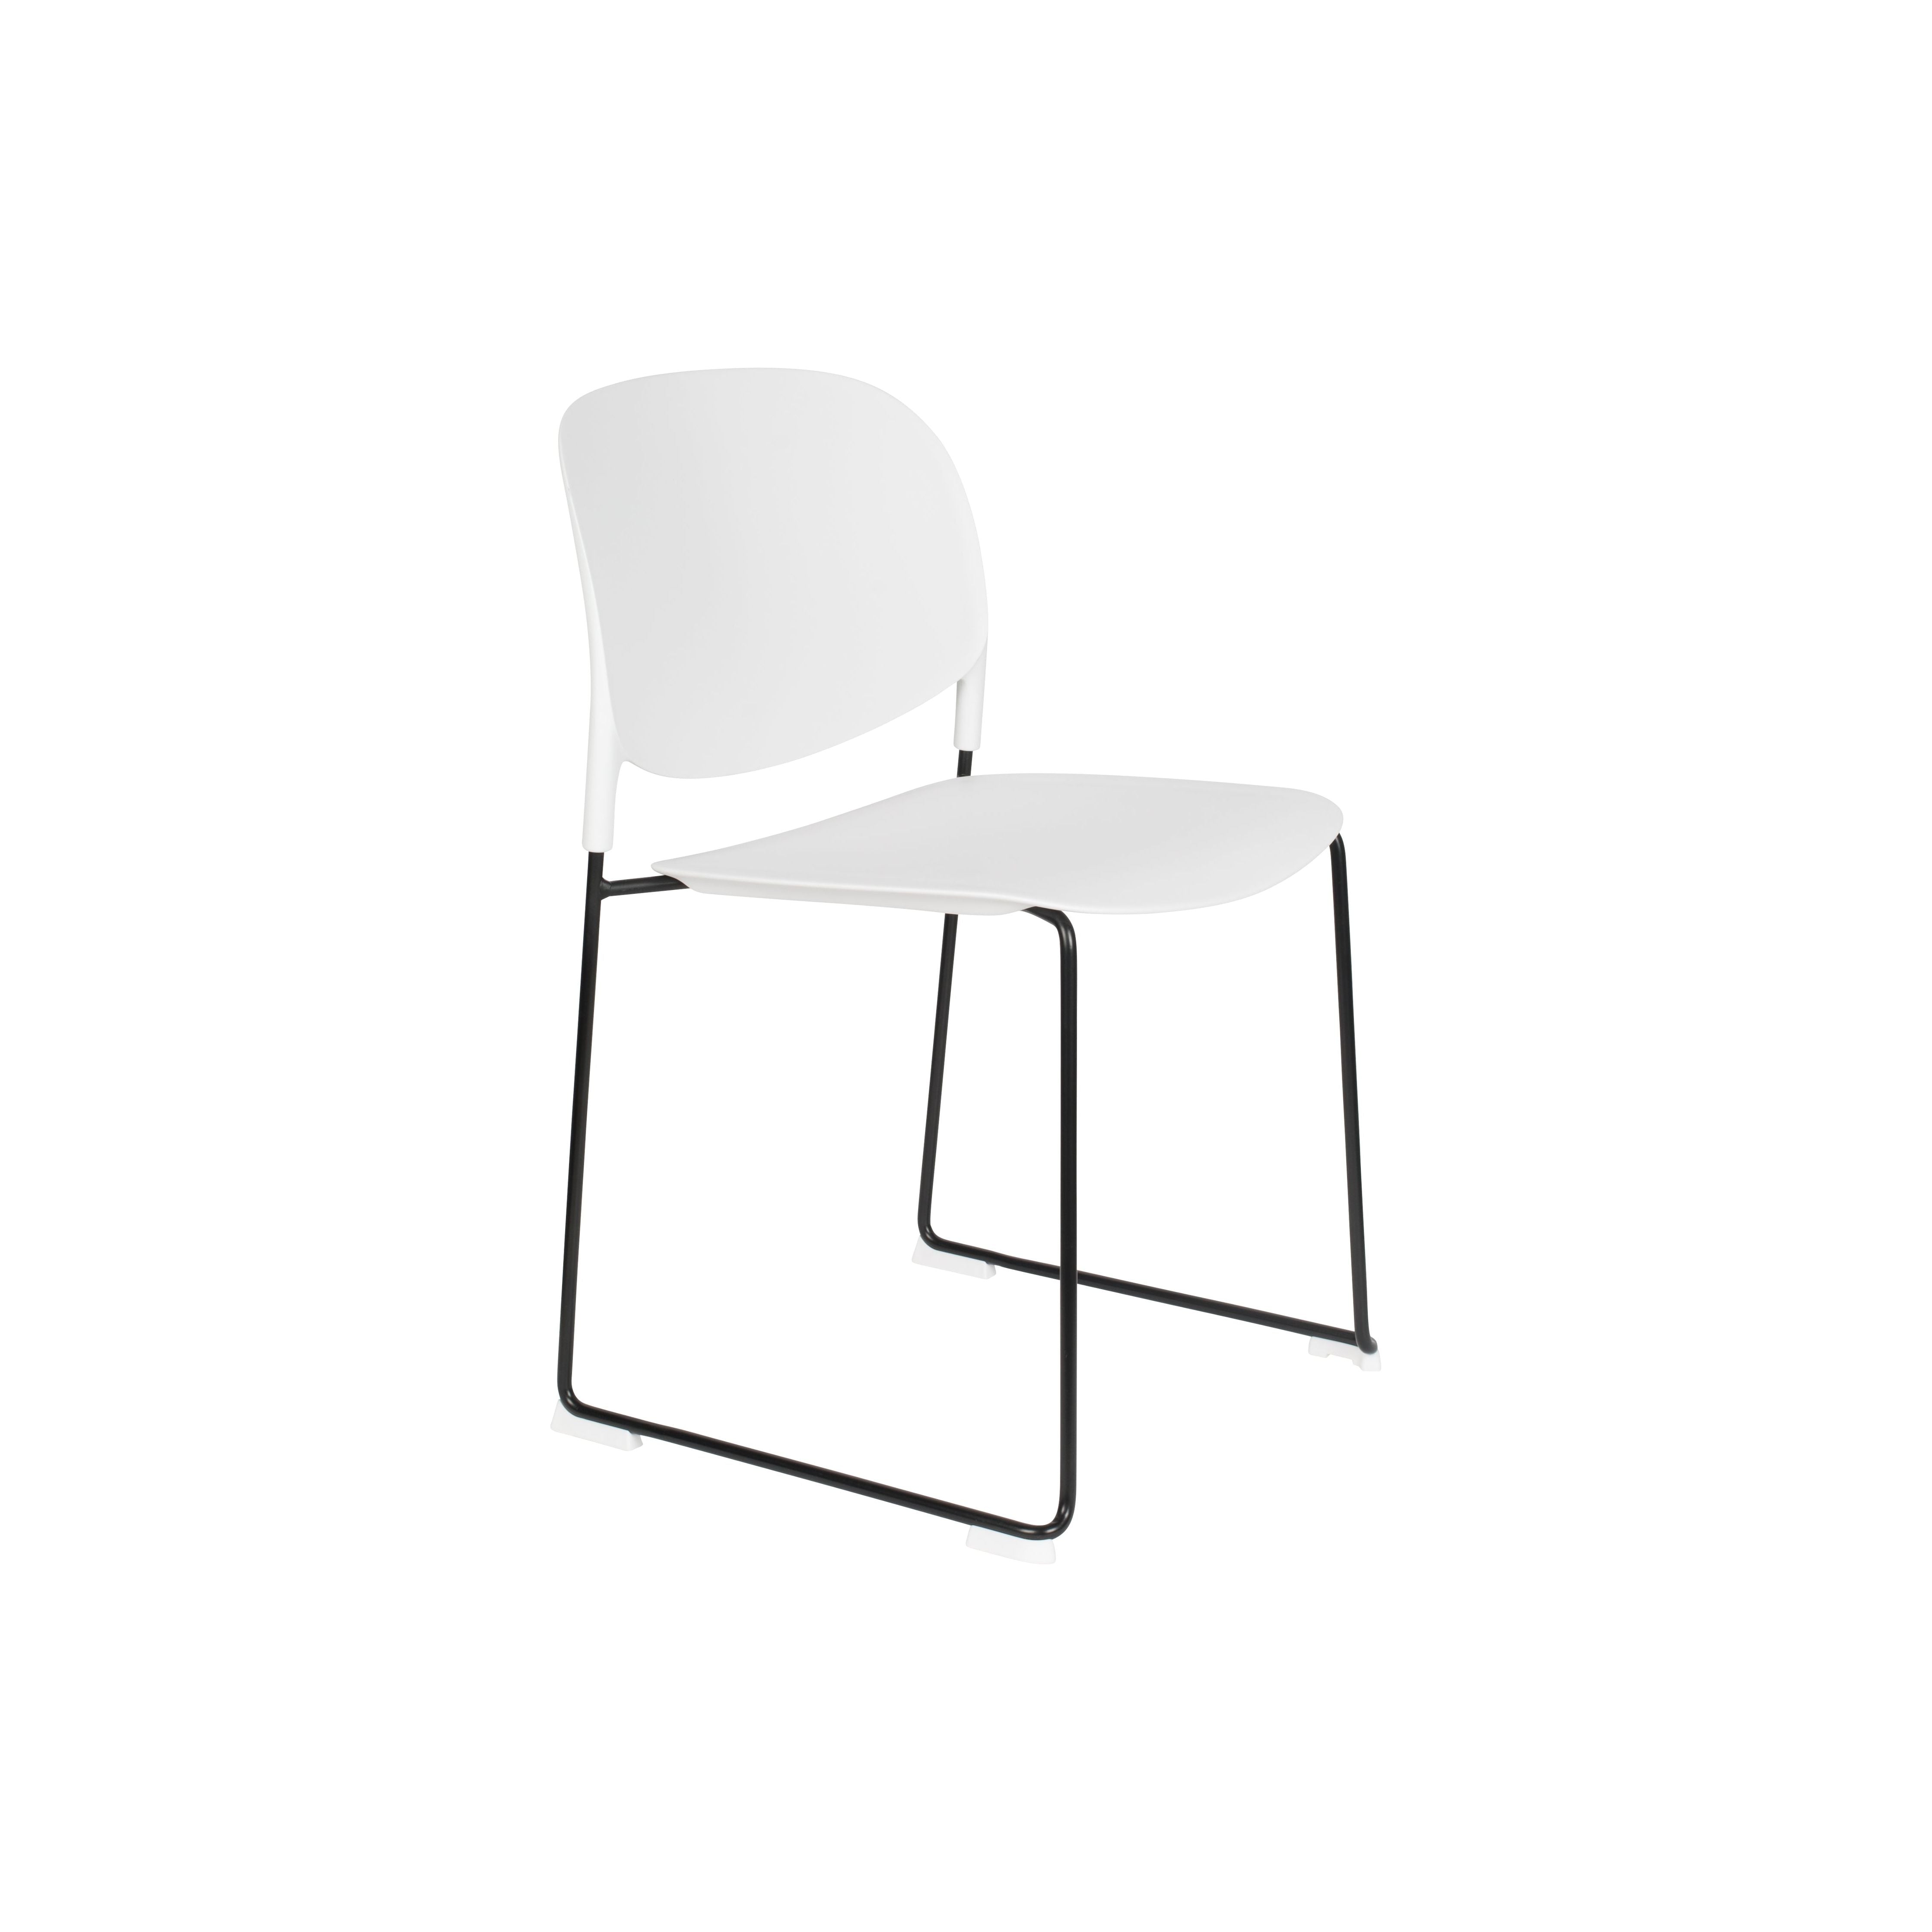 Chair stacks white